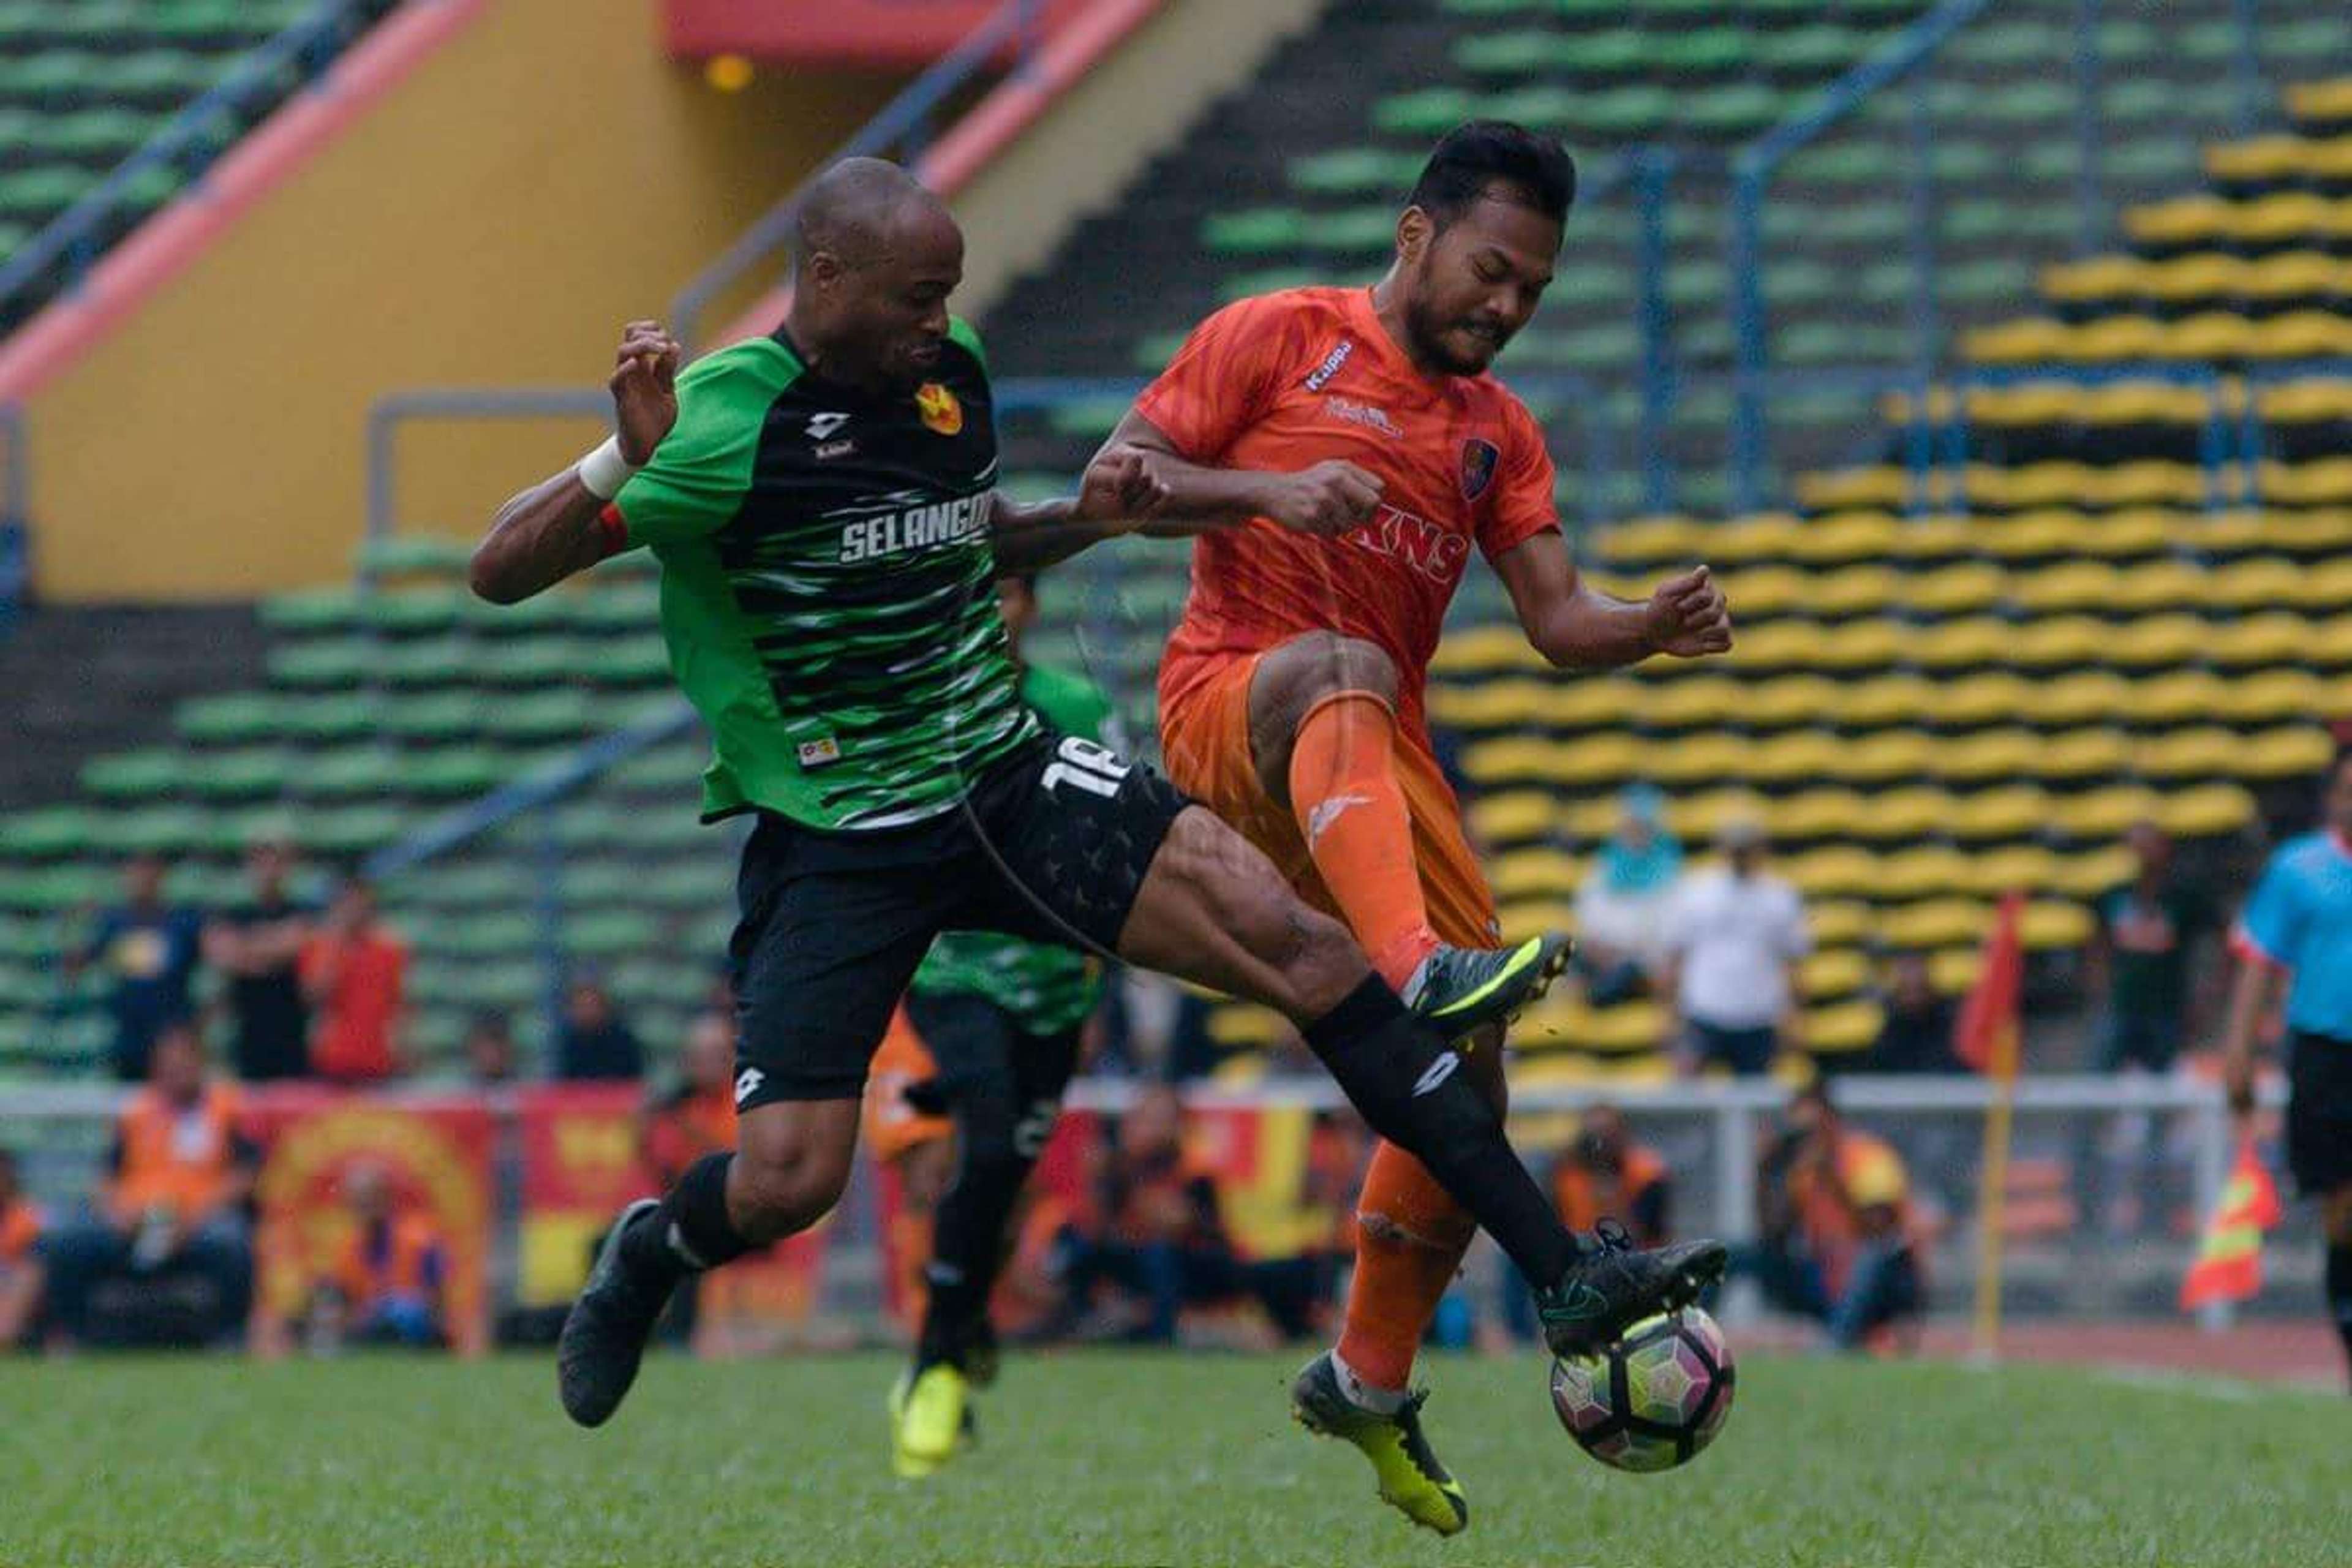 PKNS' Safee Sali (right) vies for the ball against Selangor's Ugo Ukah 4/2/2017